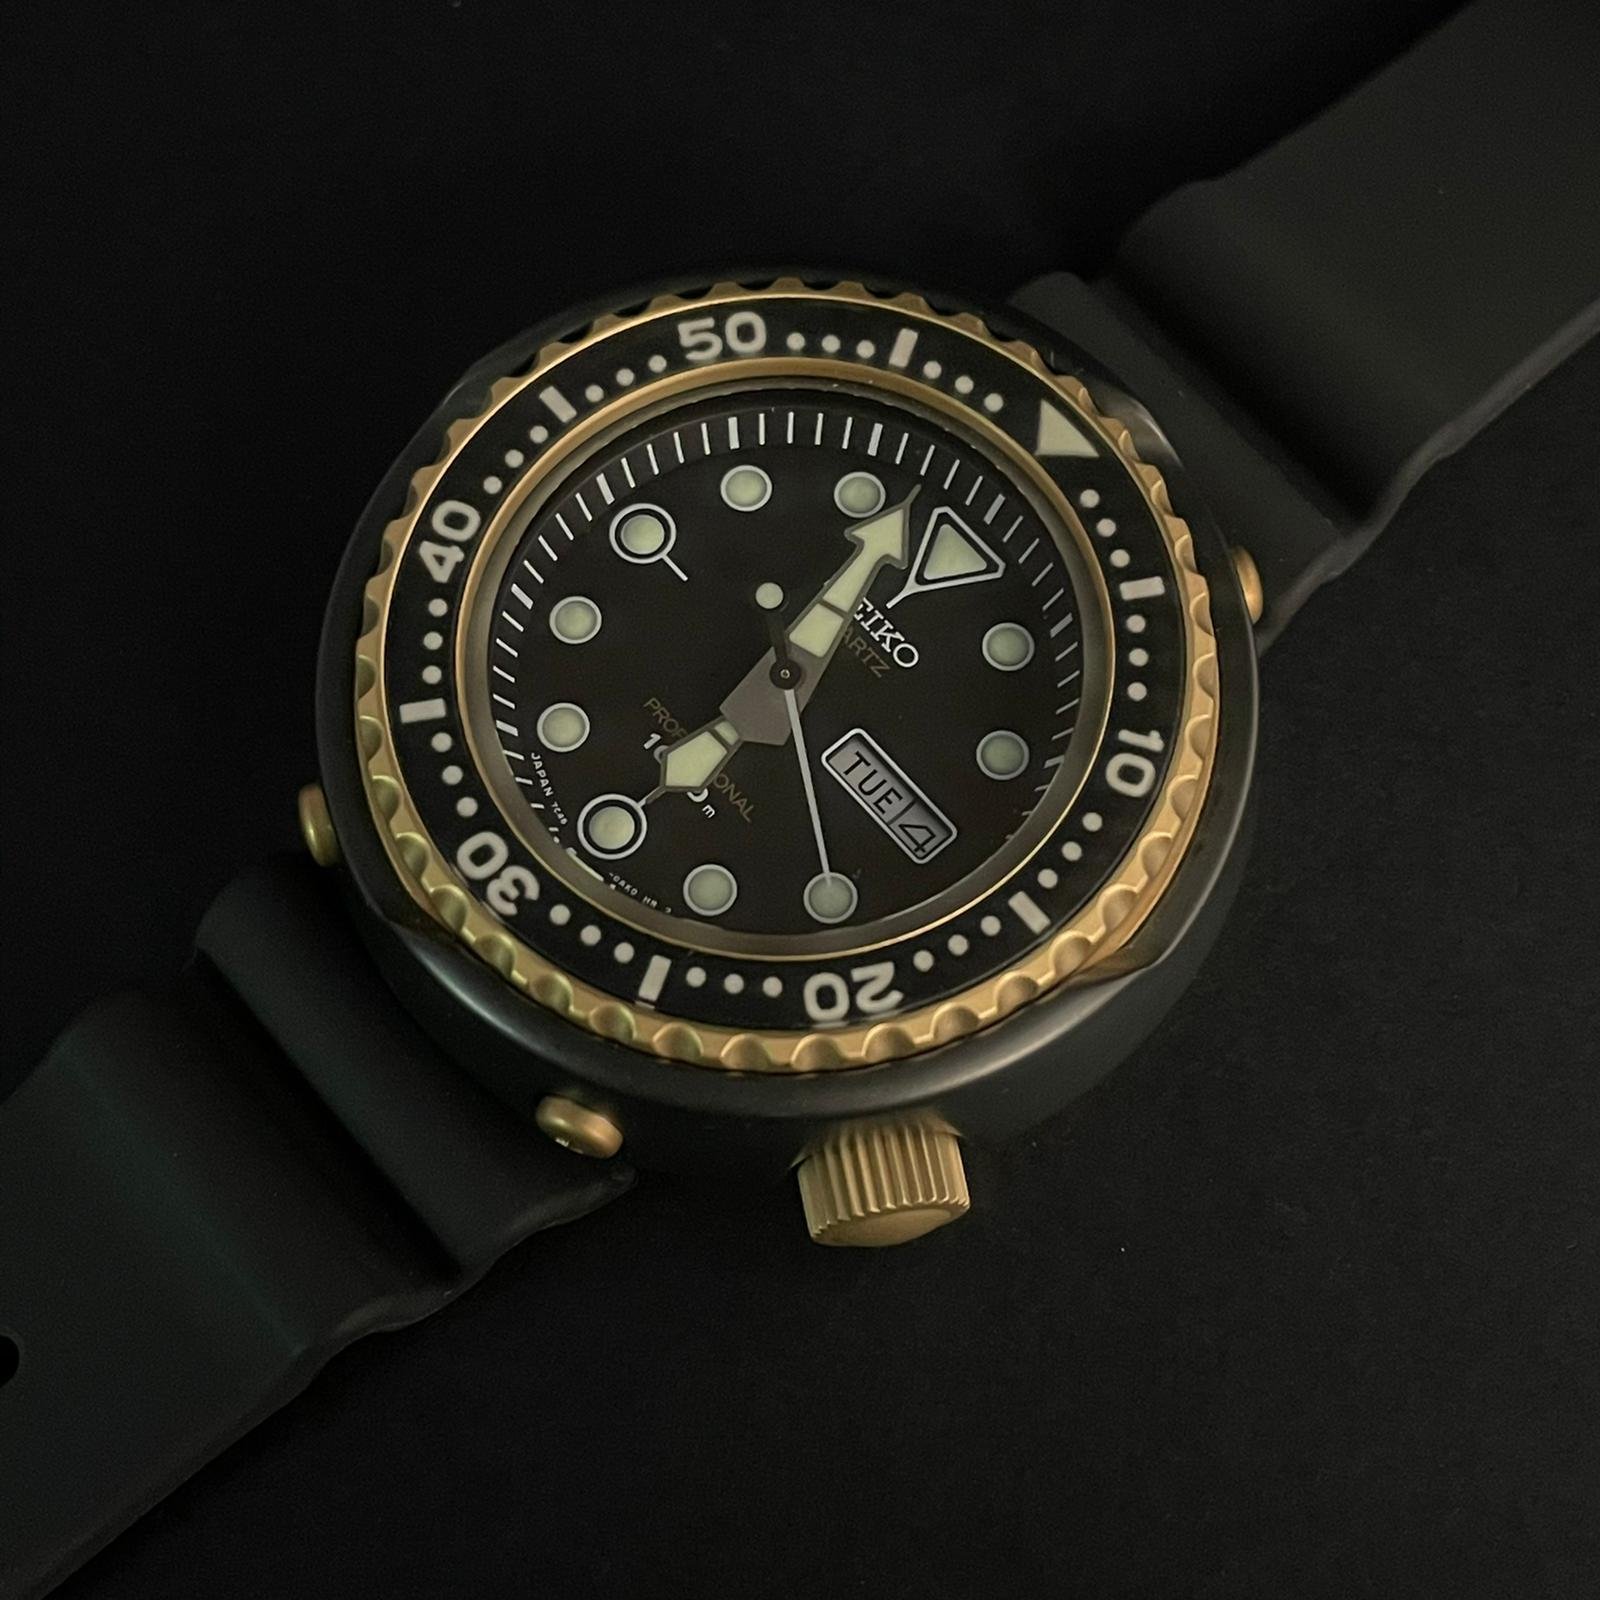 Seiko Marine Master Prospex Quartz Diver's Limited 1978 Pcs. - SBBN040 |  Luxury brand watches for sale, Monaco, Zurich, Dubai, Hong Kong